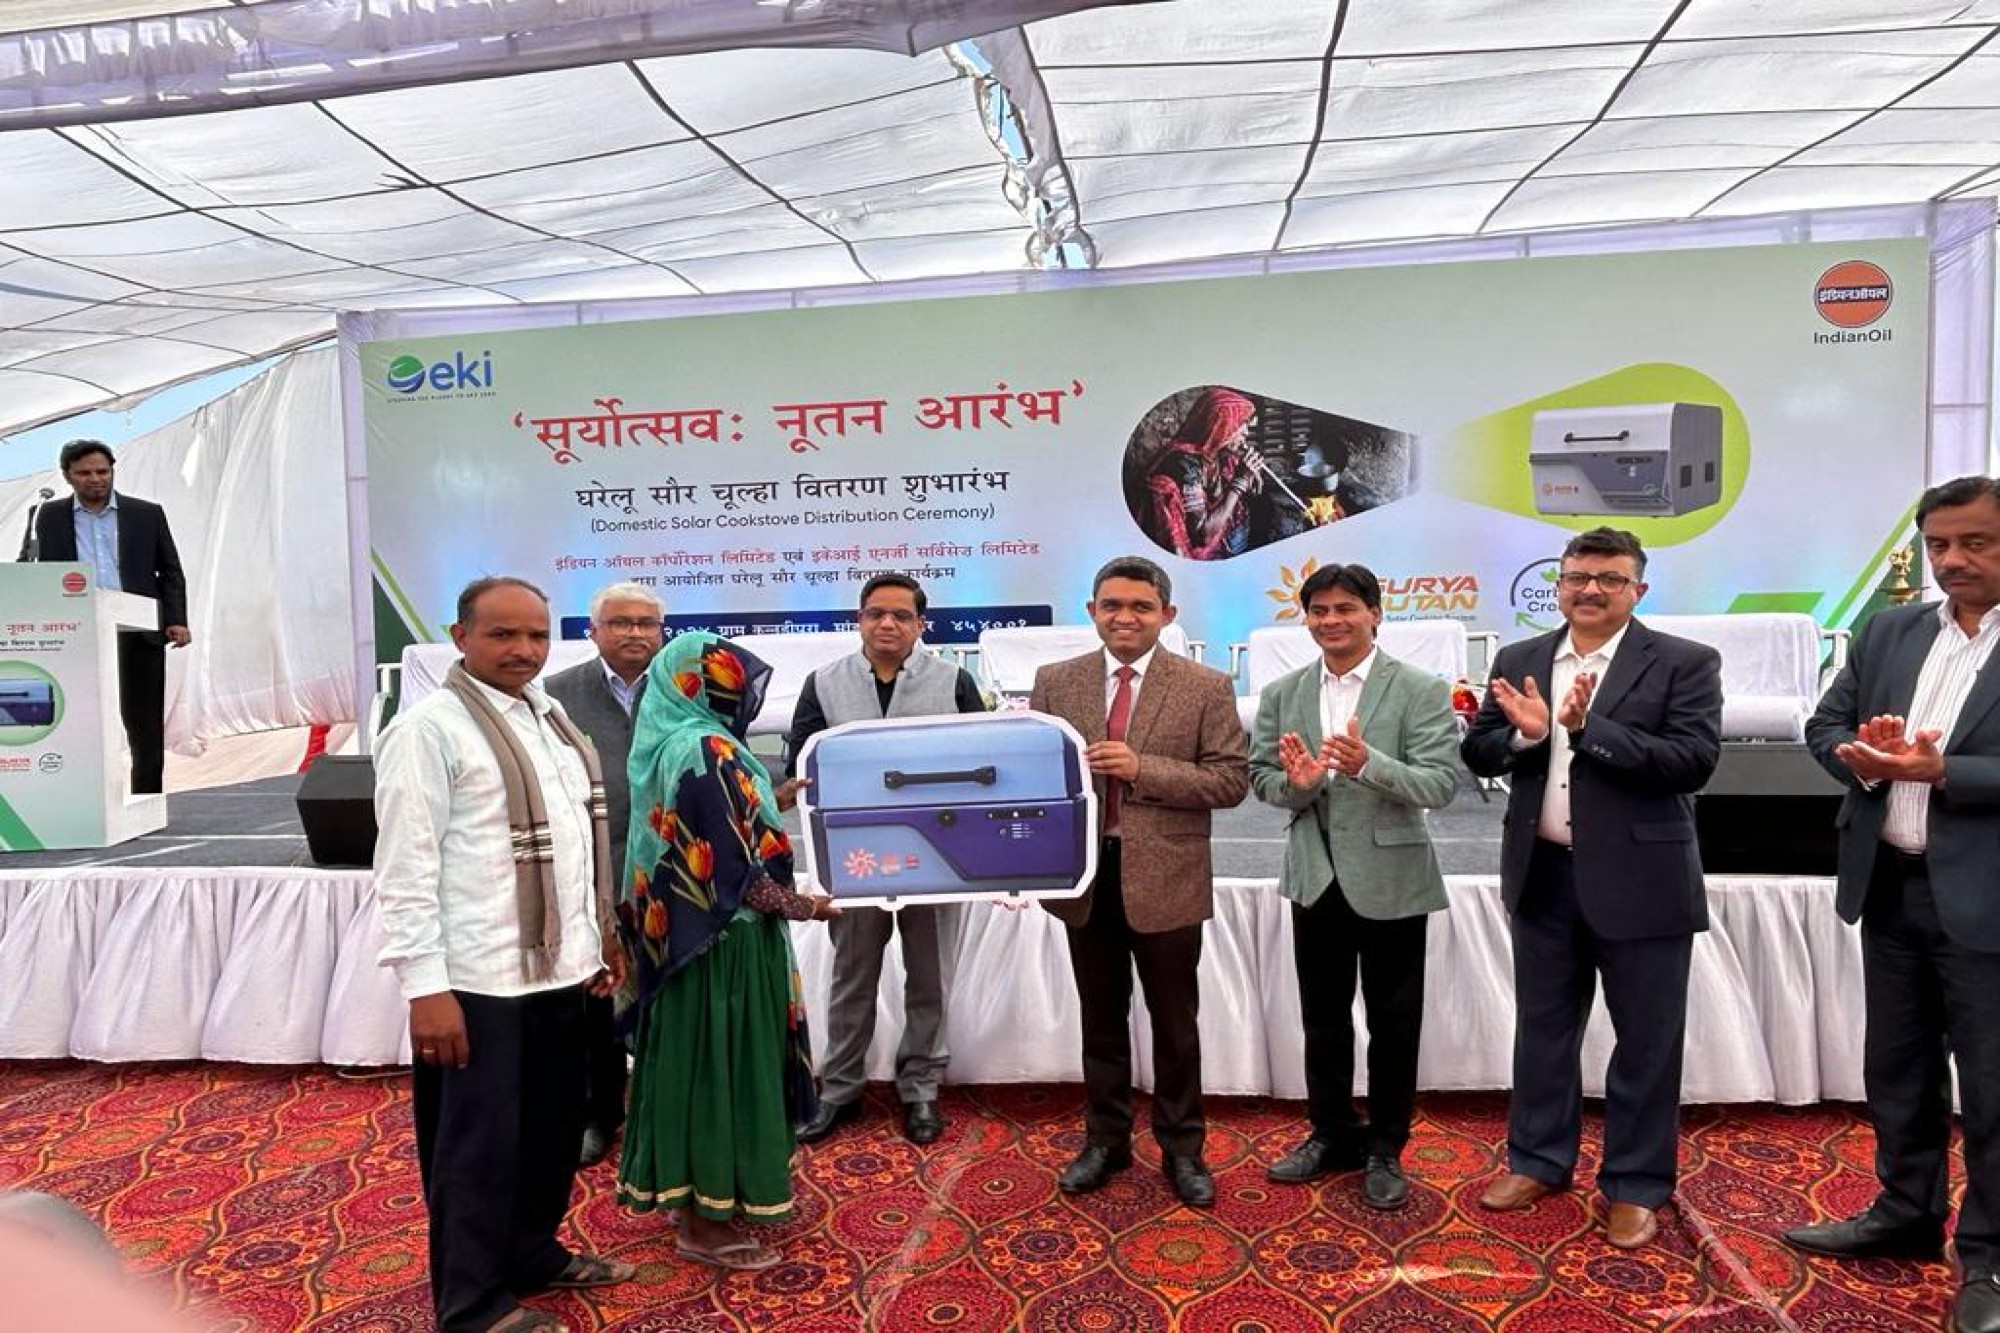 ‘Suryotsava: Nutan Aarambh’ pilot project launched marking milestone in clean cooking